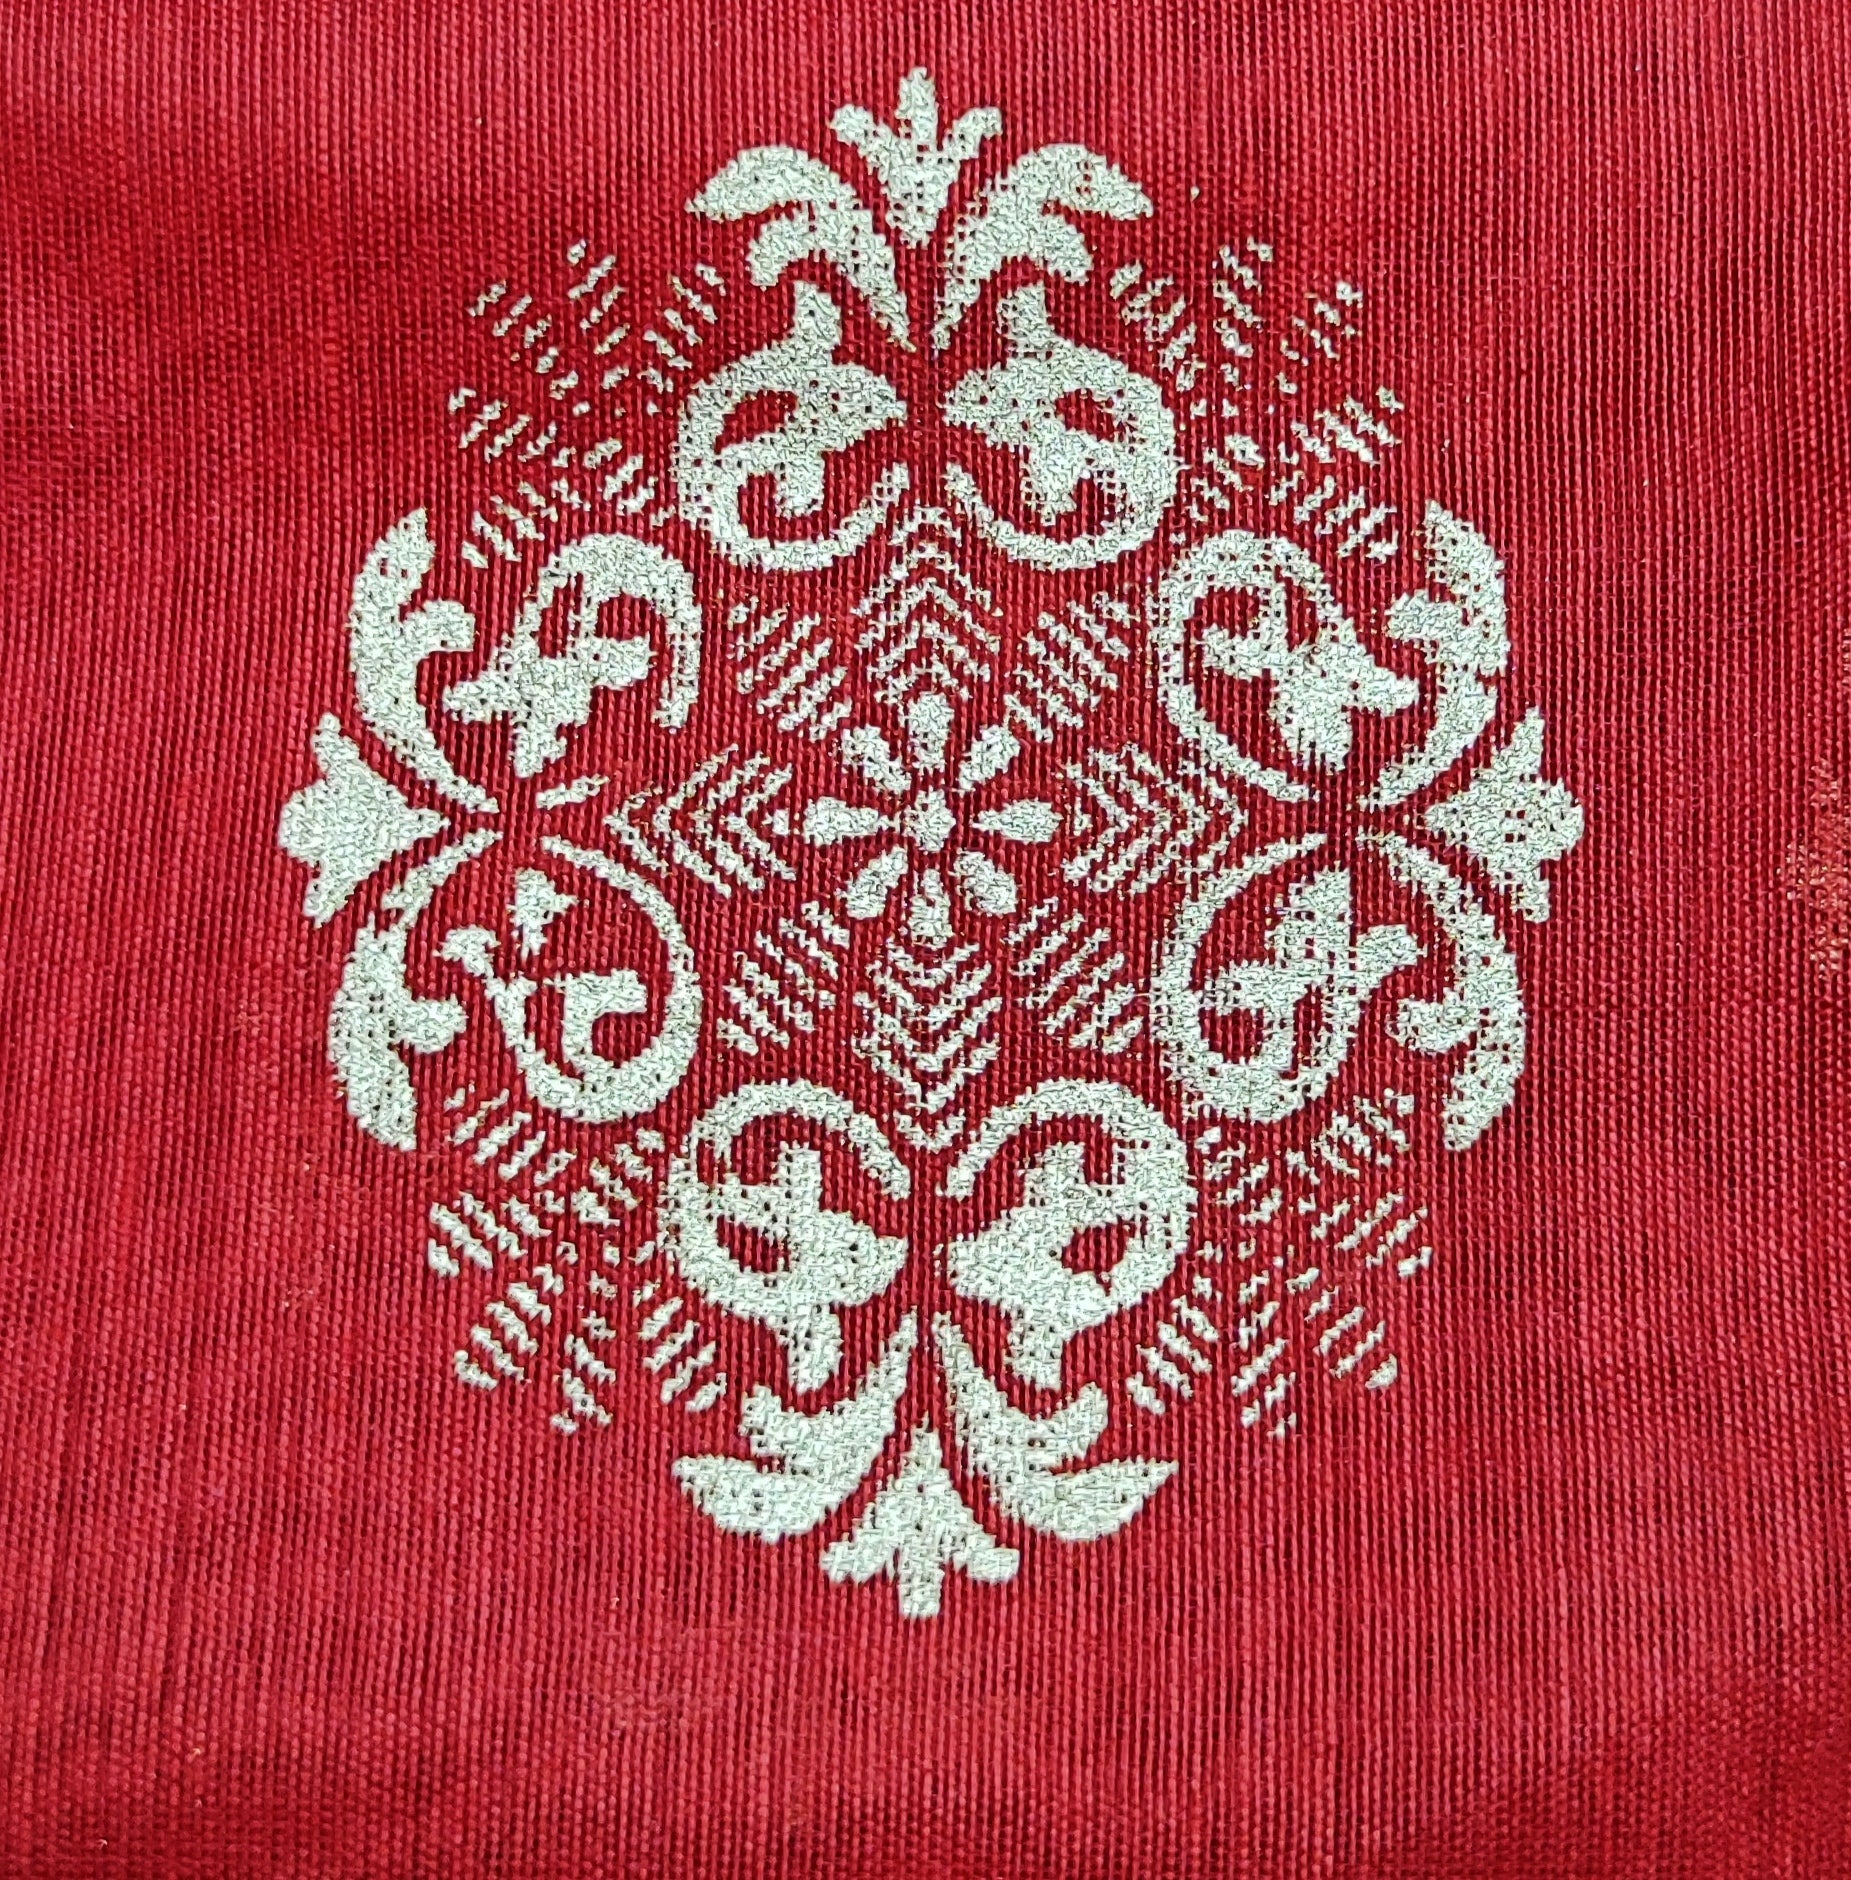 Women's Red Self Woven Gold Zari Paisley Design Cotton Silk Dupatta With Tassles - NIMIDHYA